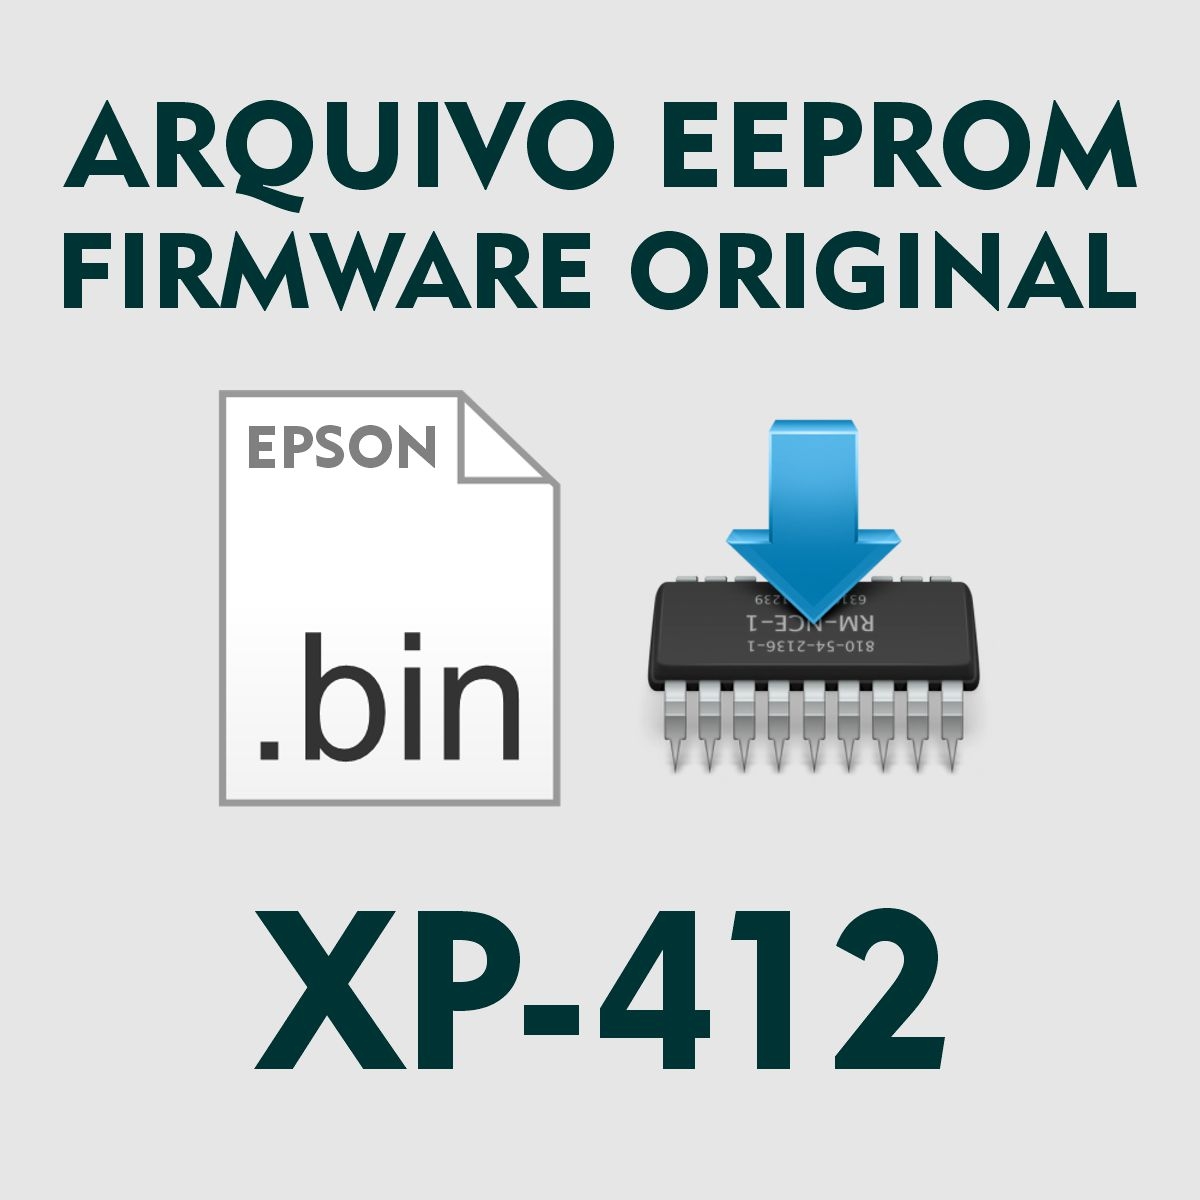 Epson XP-412 | Arquivo de Eeprom Firmware .bin - Original